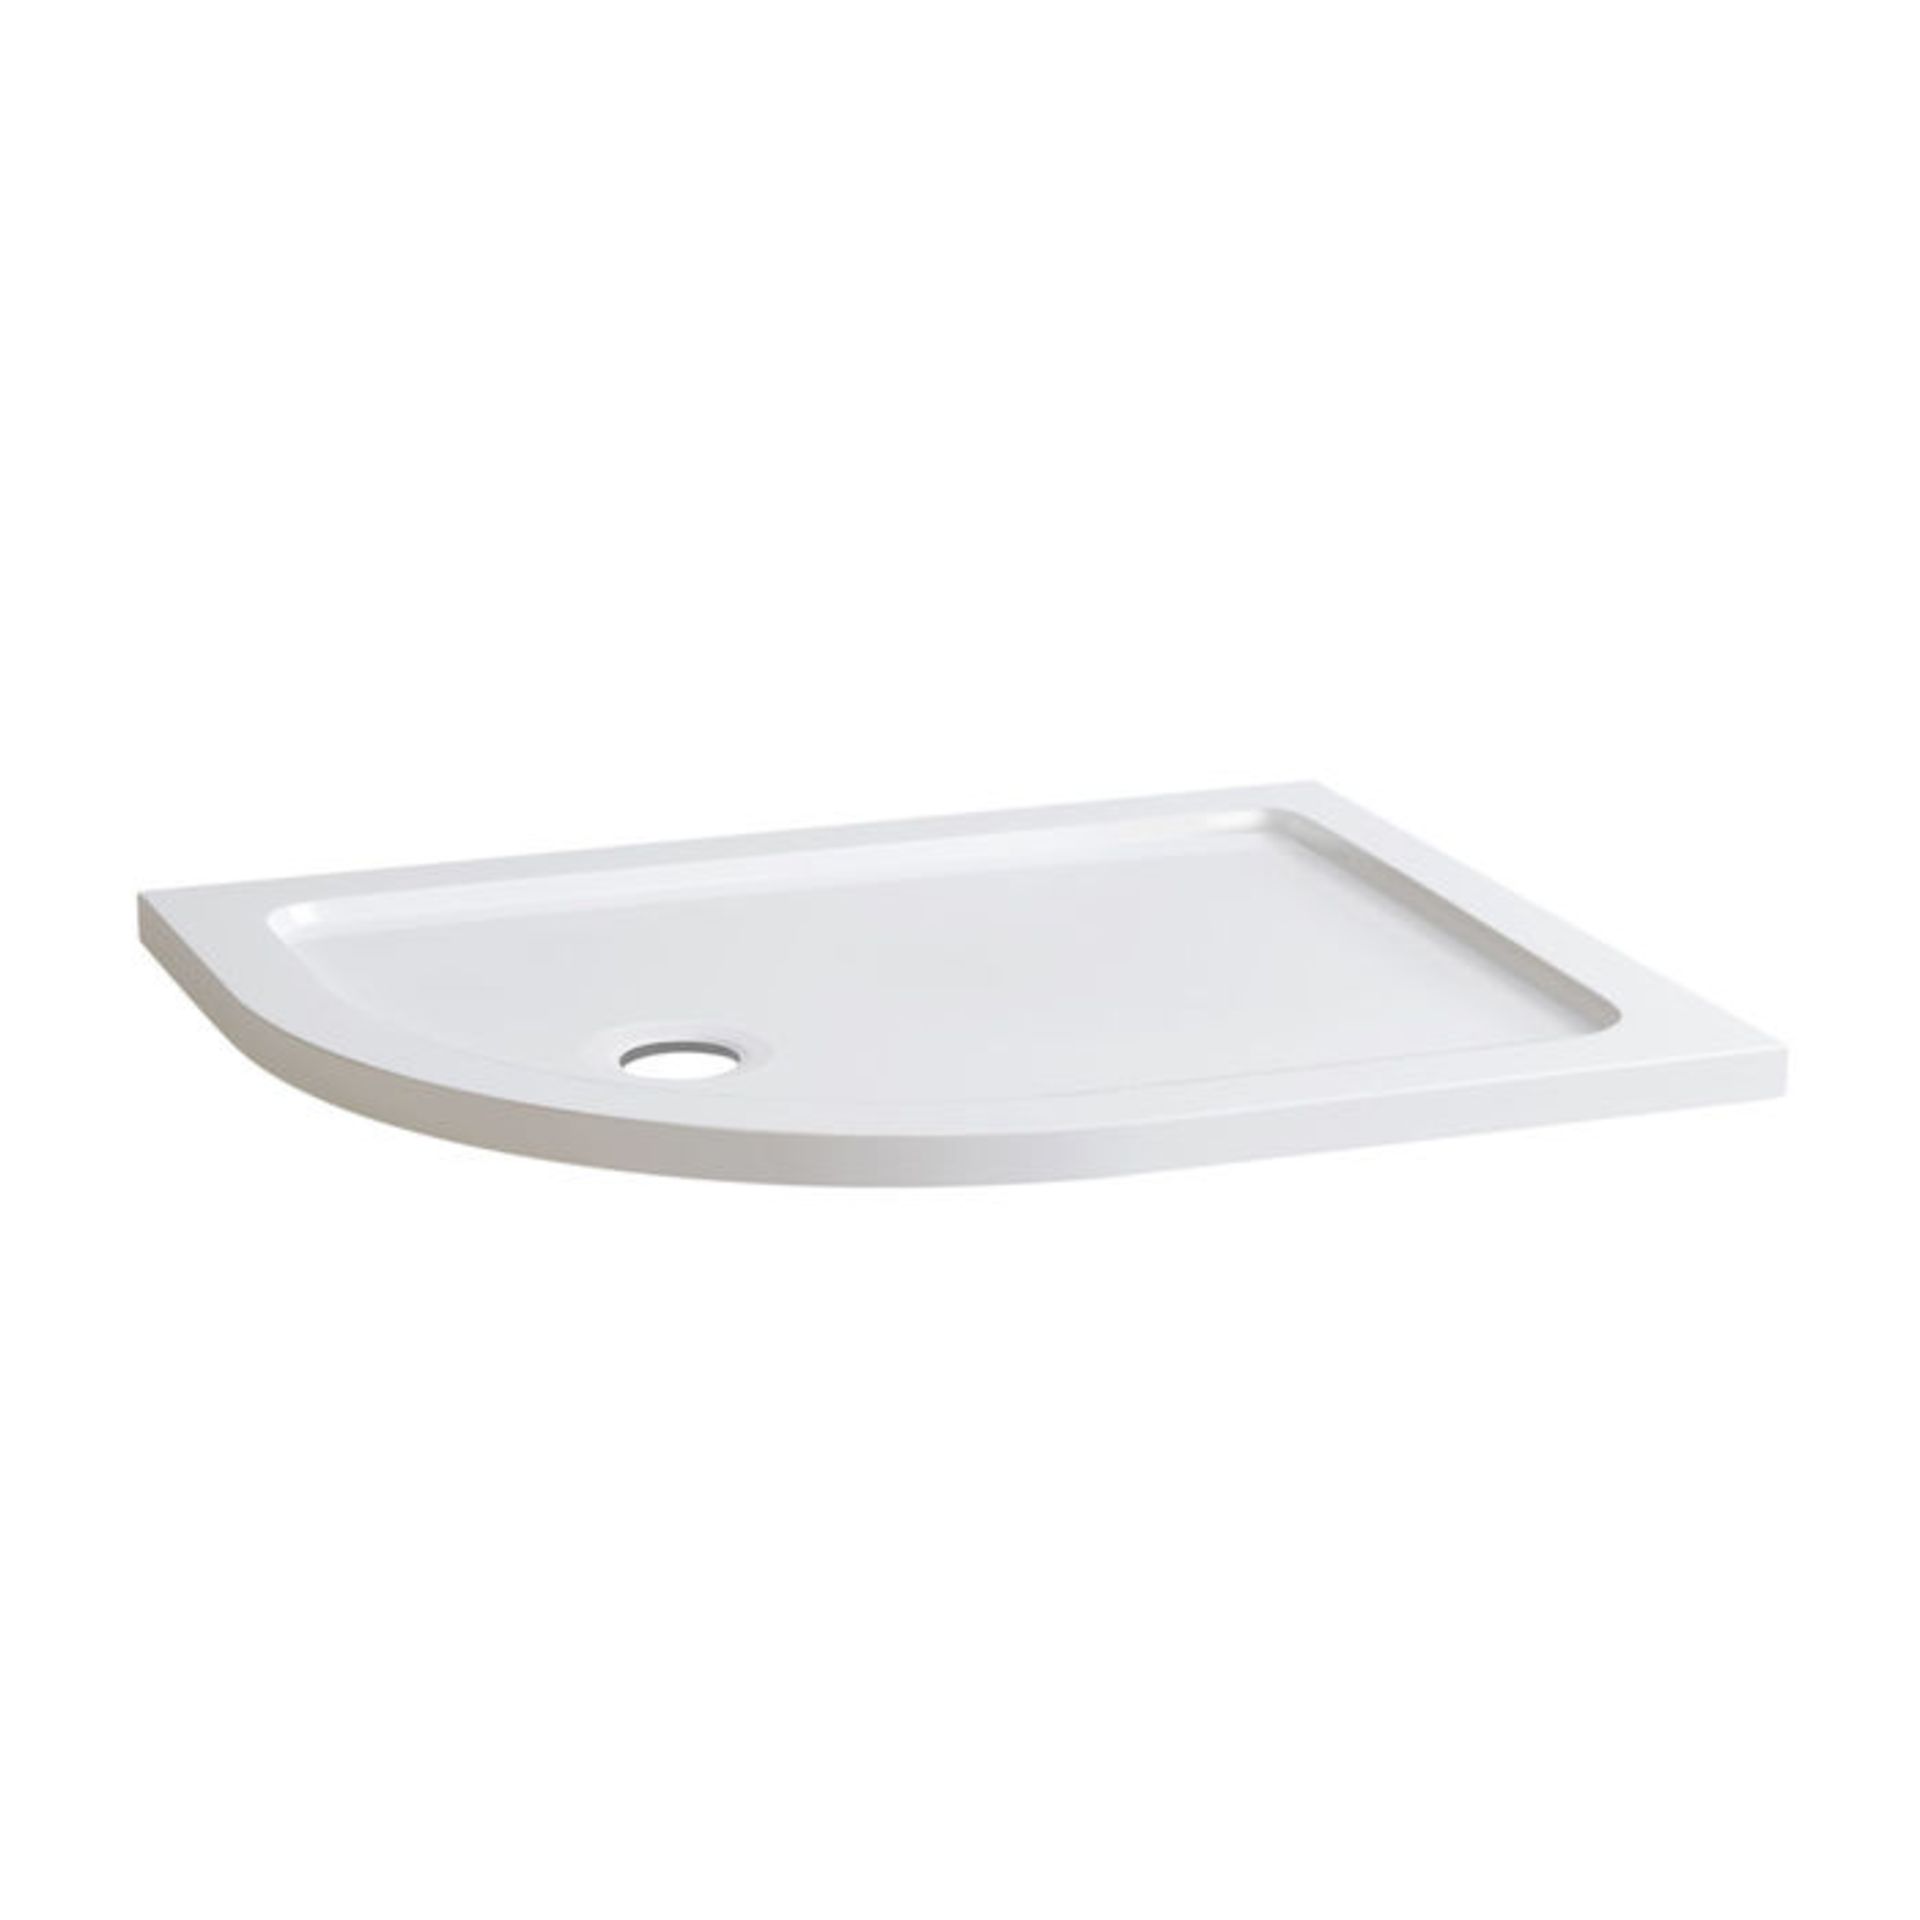 (TA83) 1000x800mm Offset Quadrant Ultra Slim Stone Shower Tray - Left. Low profile ultra slim design - Image 2 of 2